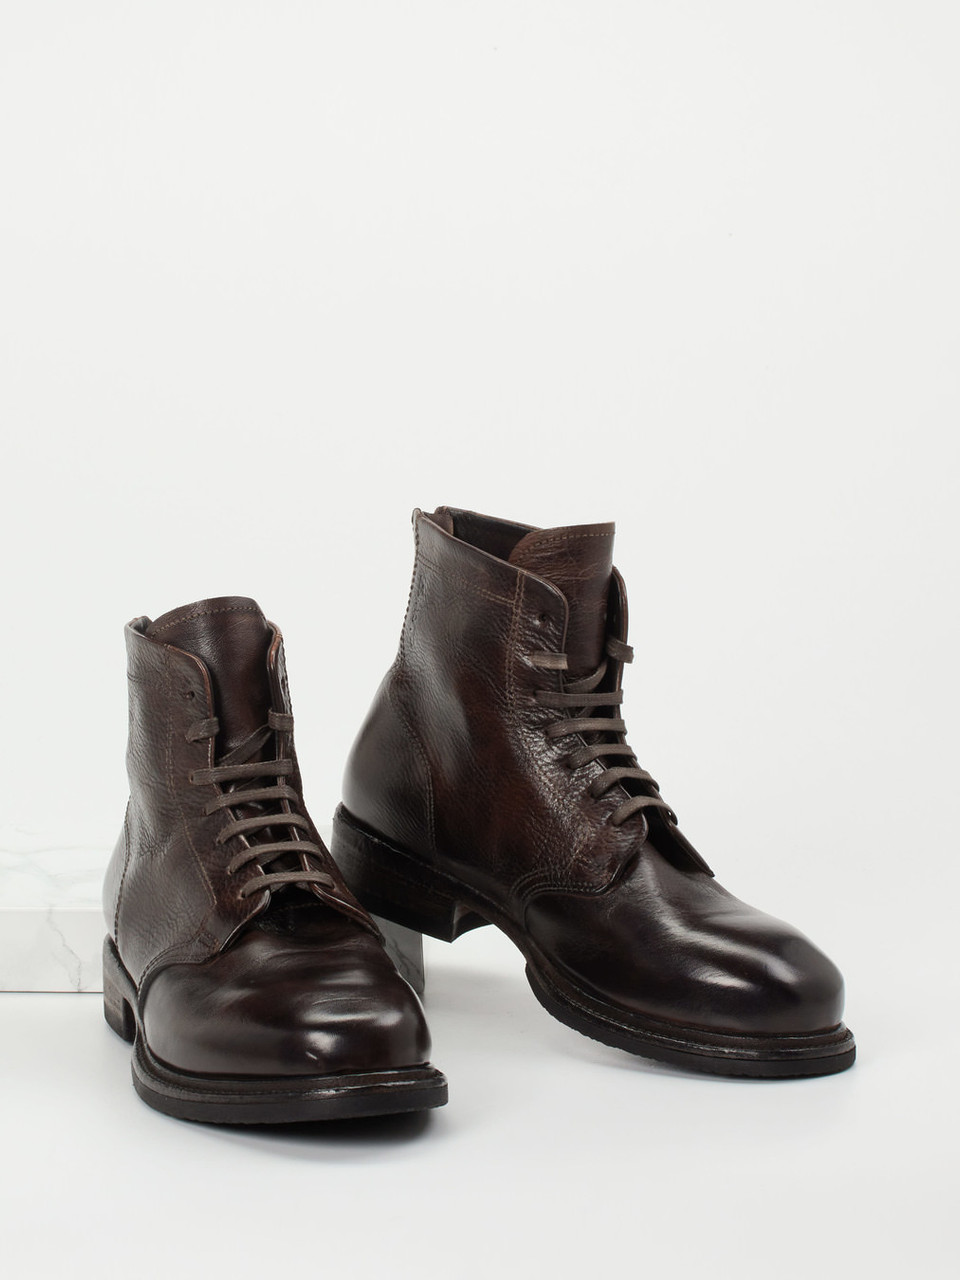 Boots braun 4700209063404